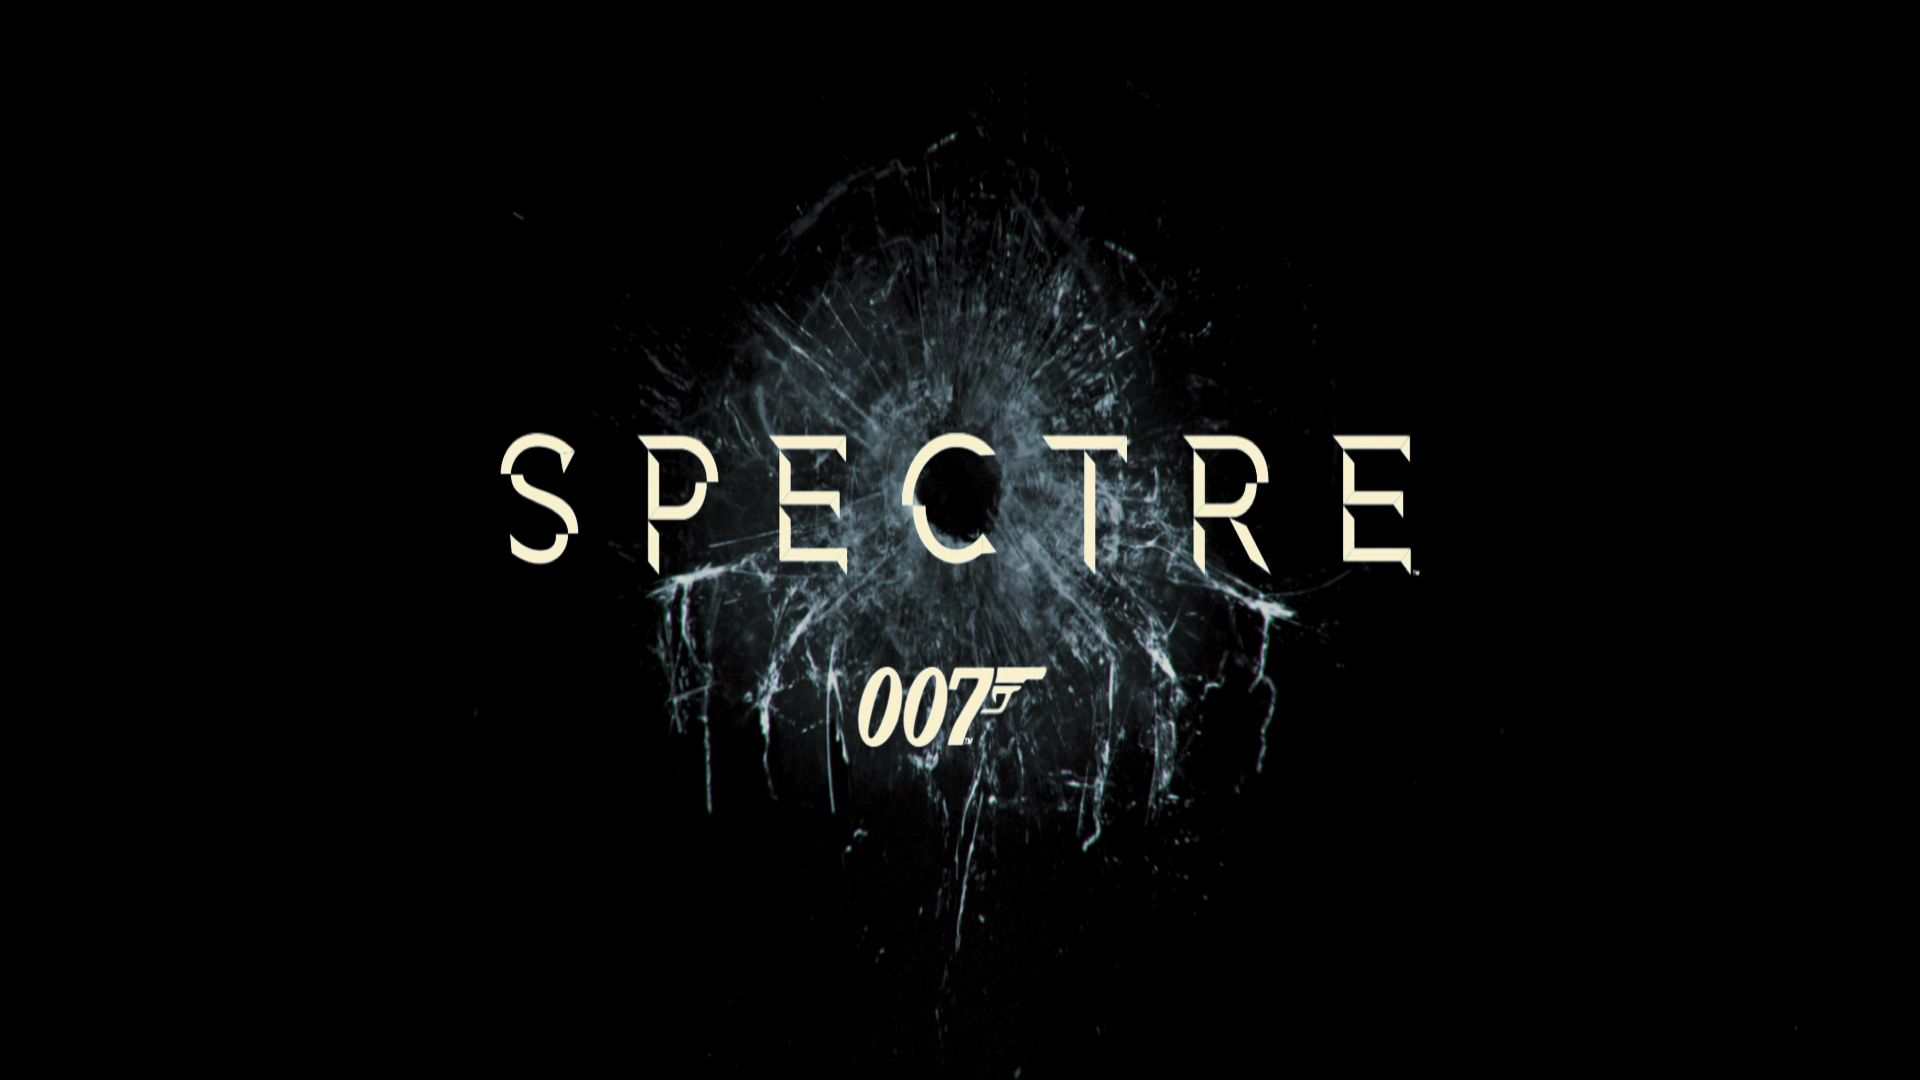 363288 descargar imagen spectre: 007, películas, enlace de james, espectro (película): fondos de pantalla y protectores de pantalla gratis